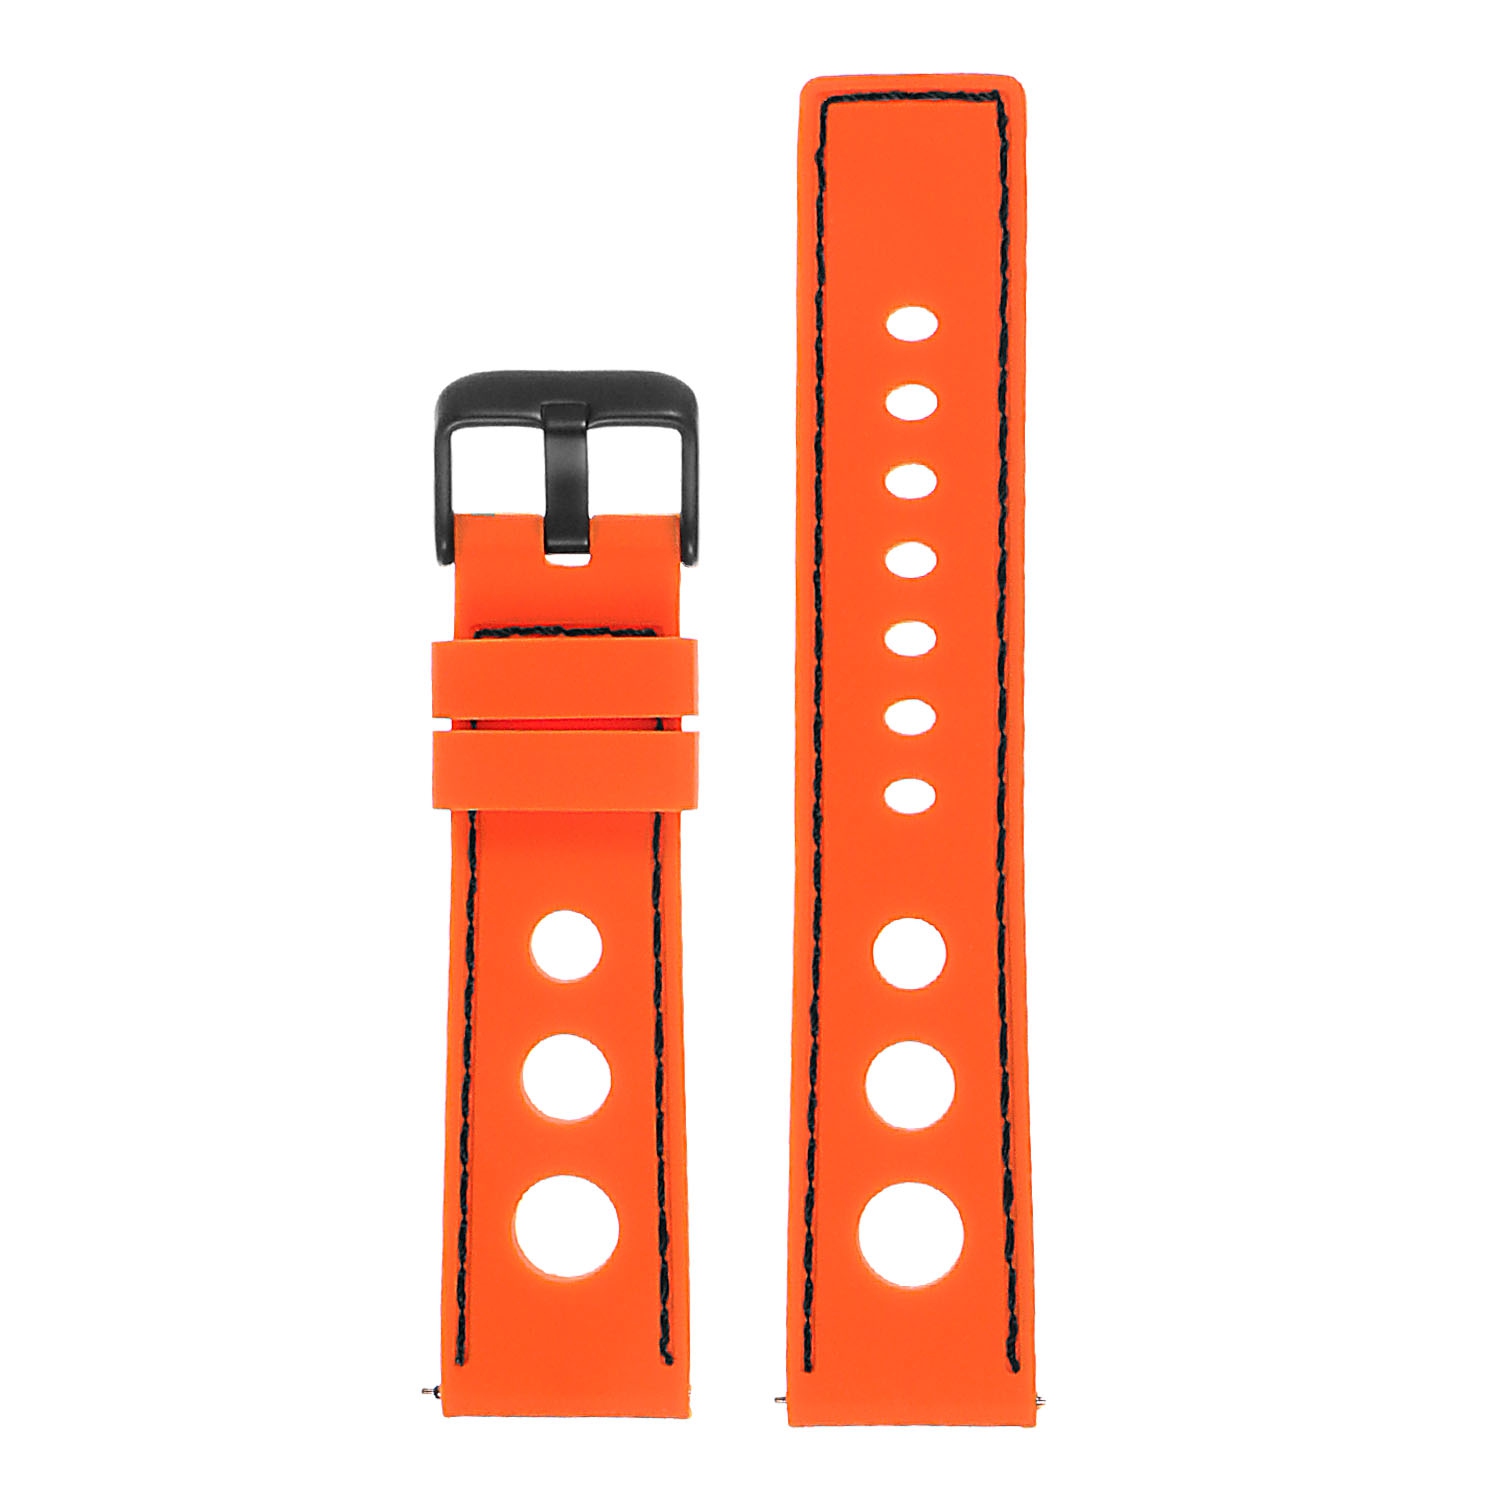 StrapsCo Silicone Rubber Rally Watch Band Strap for Michael Kors MKGO Watch - Orange & Black (Black Buckle)